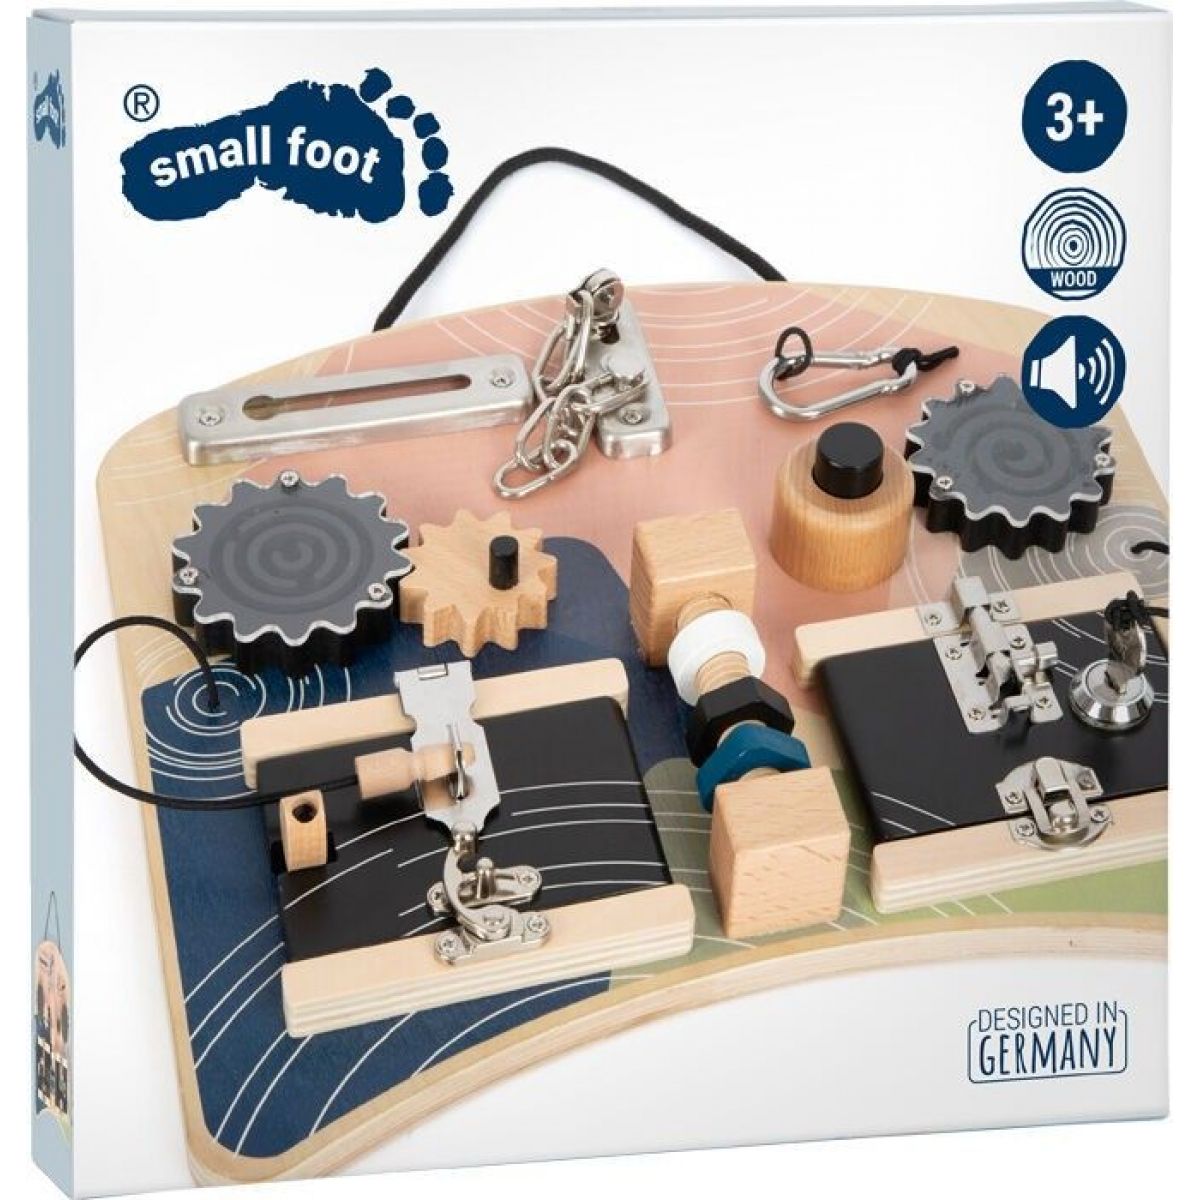 Small Foot Motorická deska se zámky a otáčivými prvky | Maxíkovy hračky